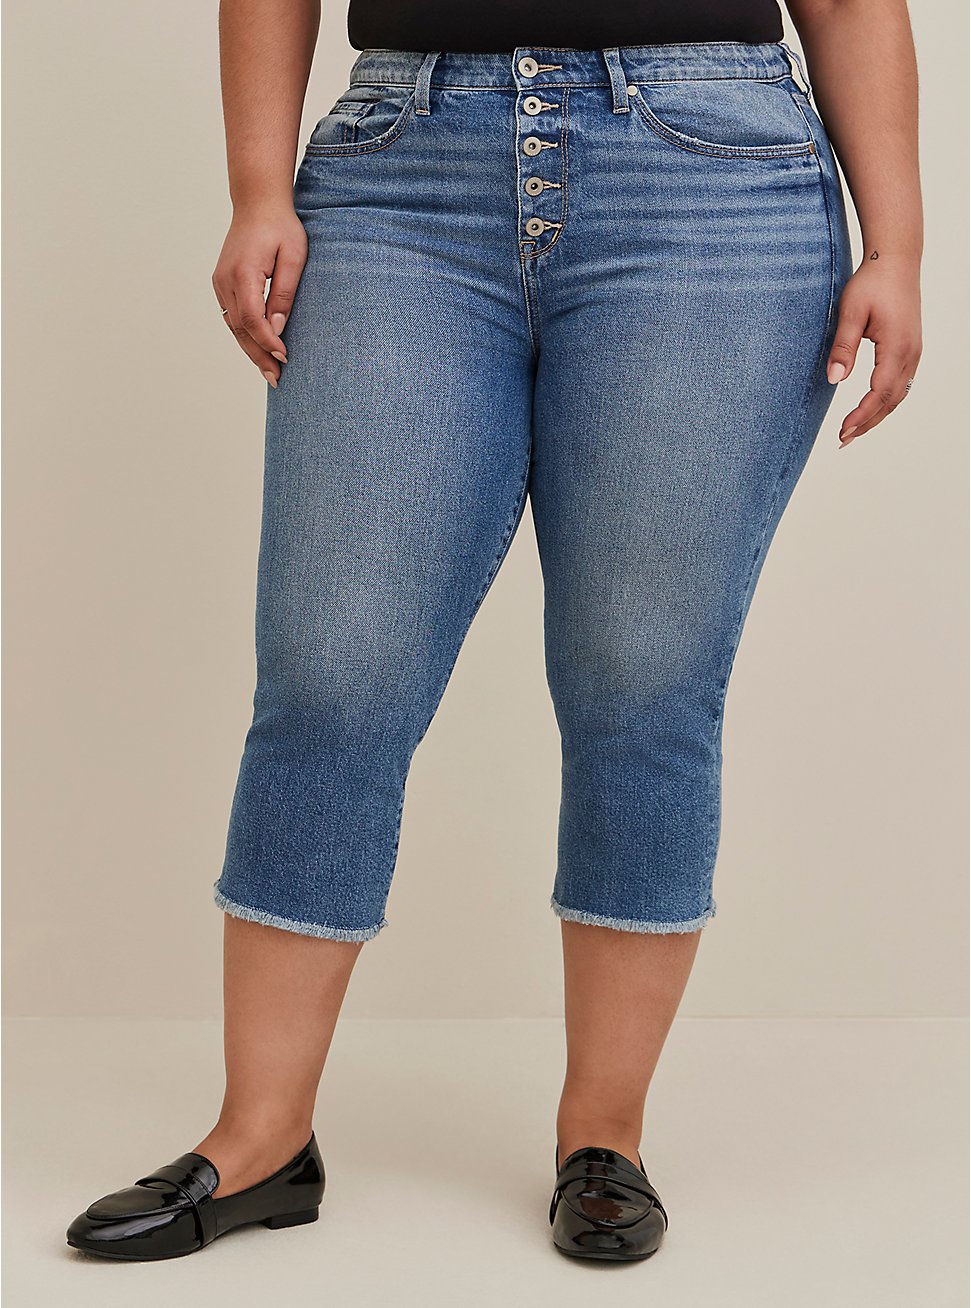 Plus Size Crop Stovepipe Straight Jean – Classic Denim Medium Wash, ATTABOY, hi-res